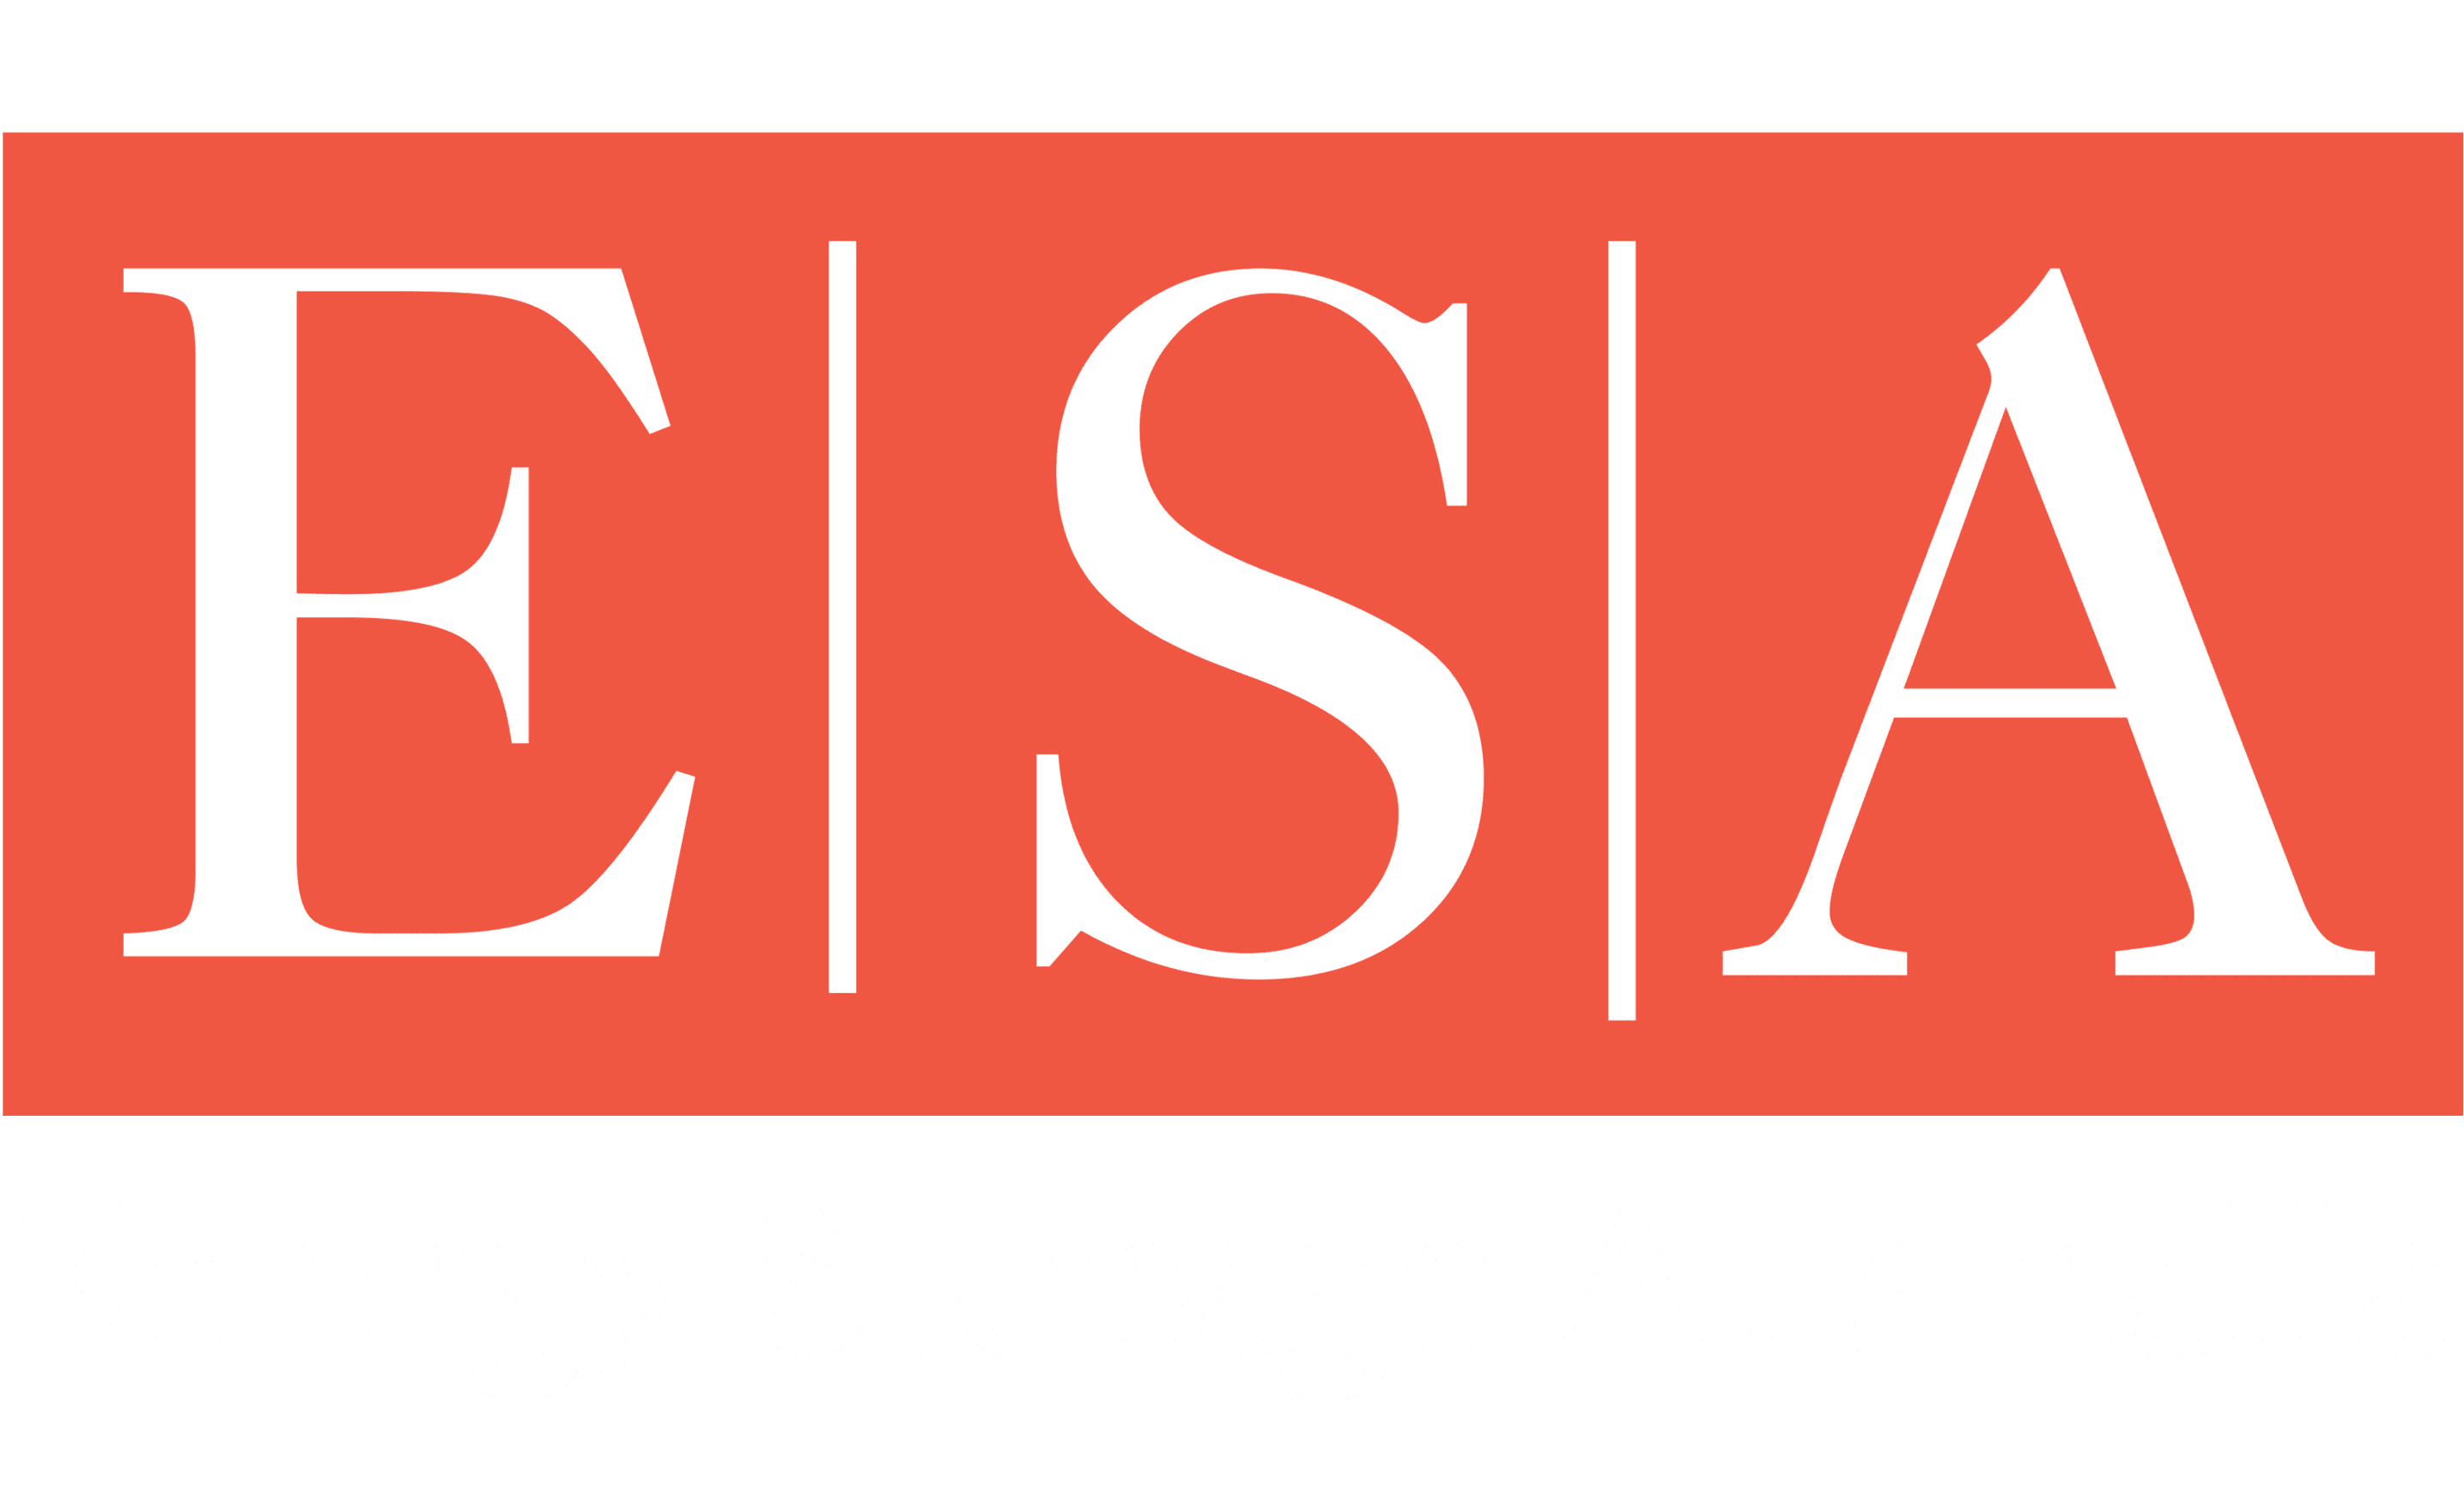 Energy Storage Australia